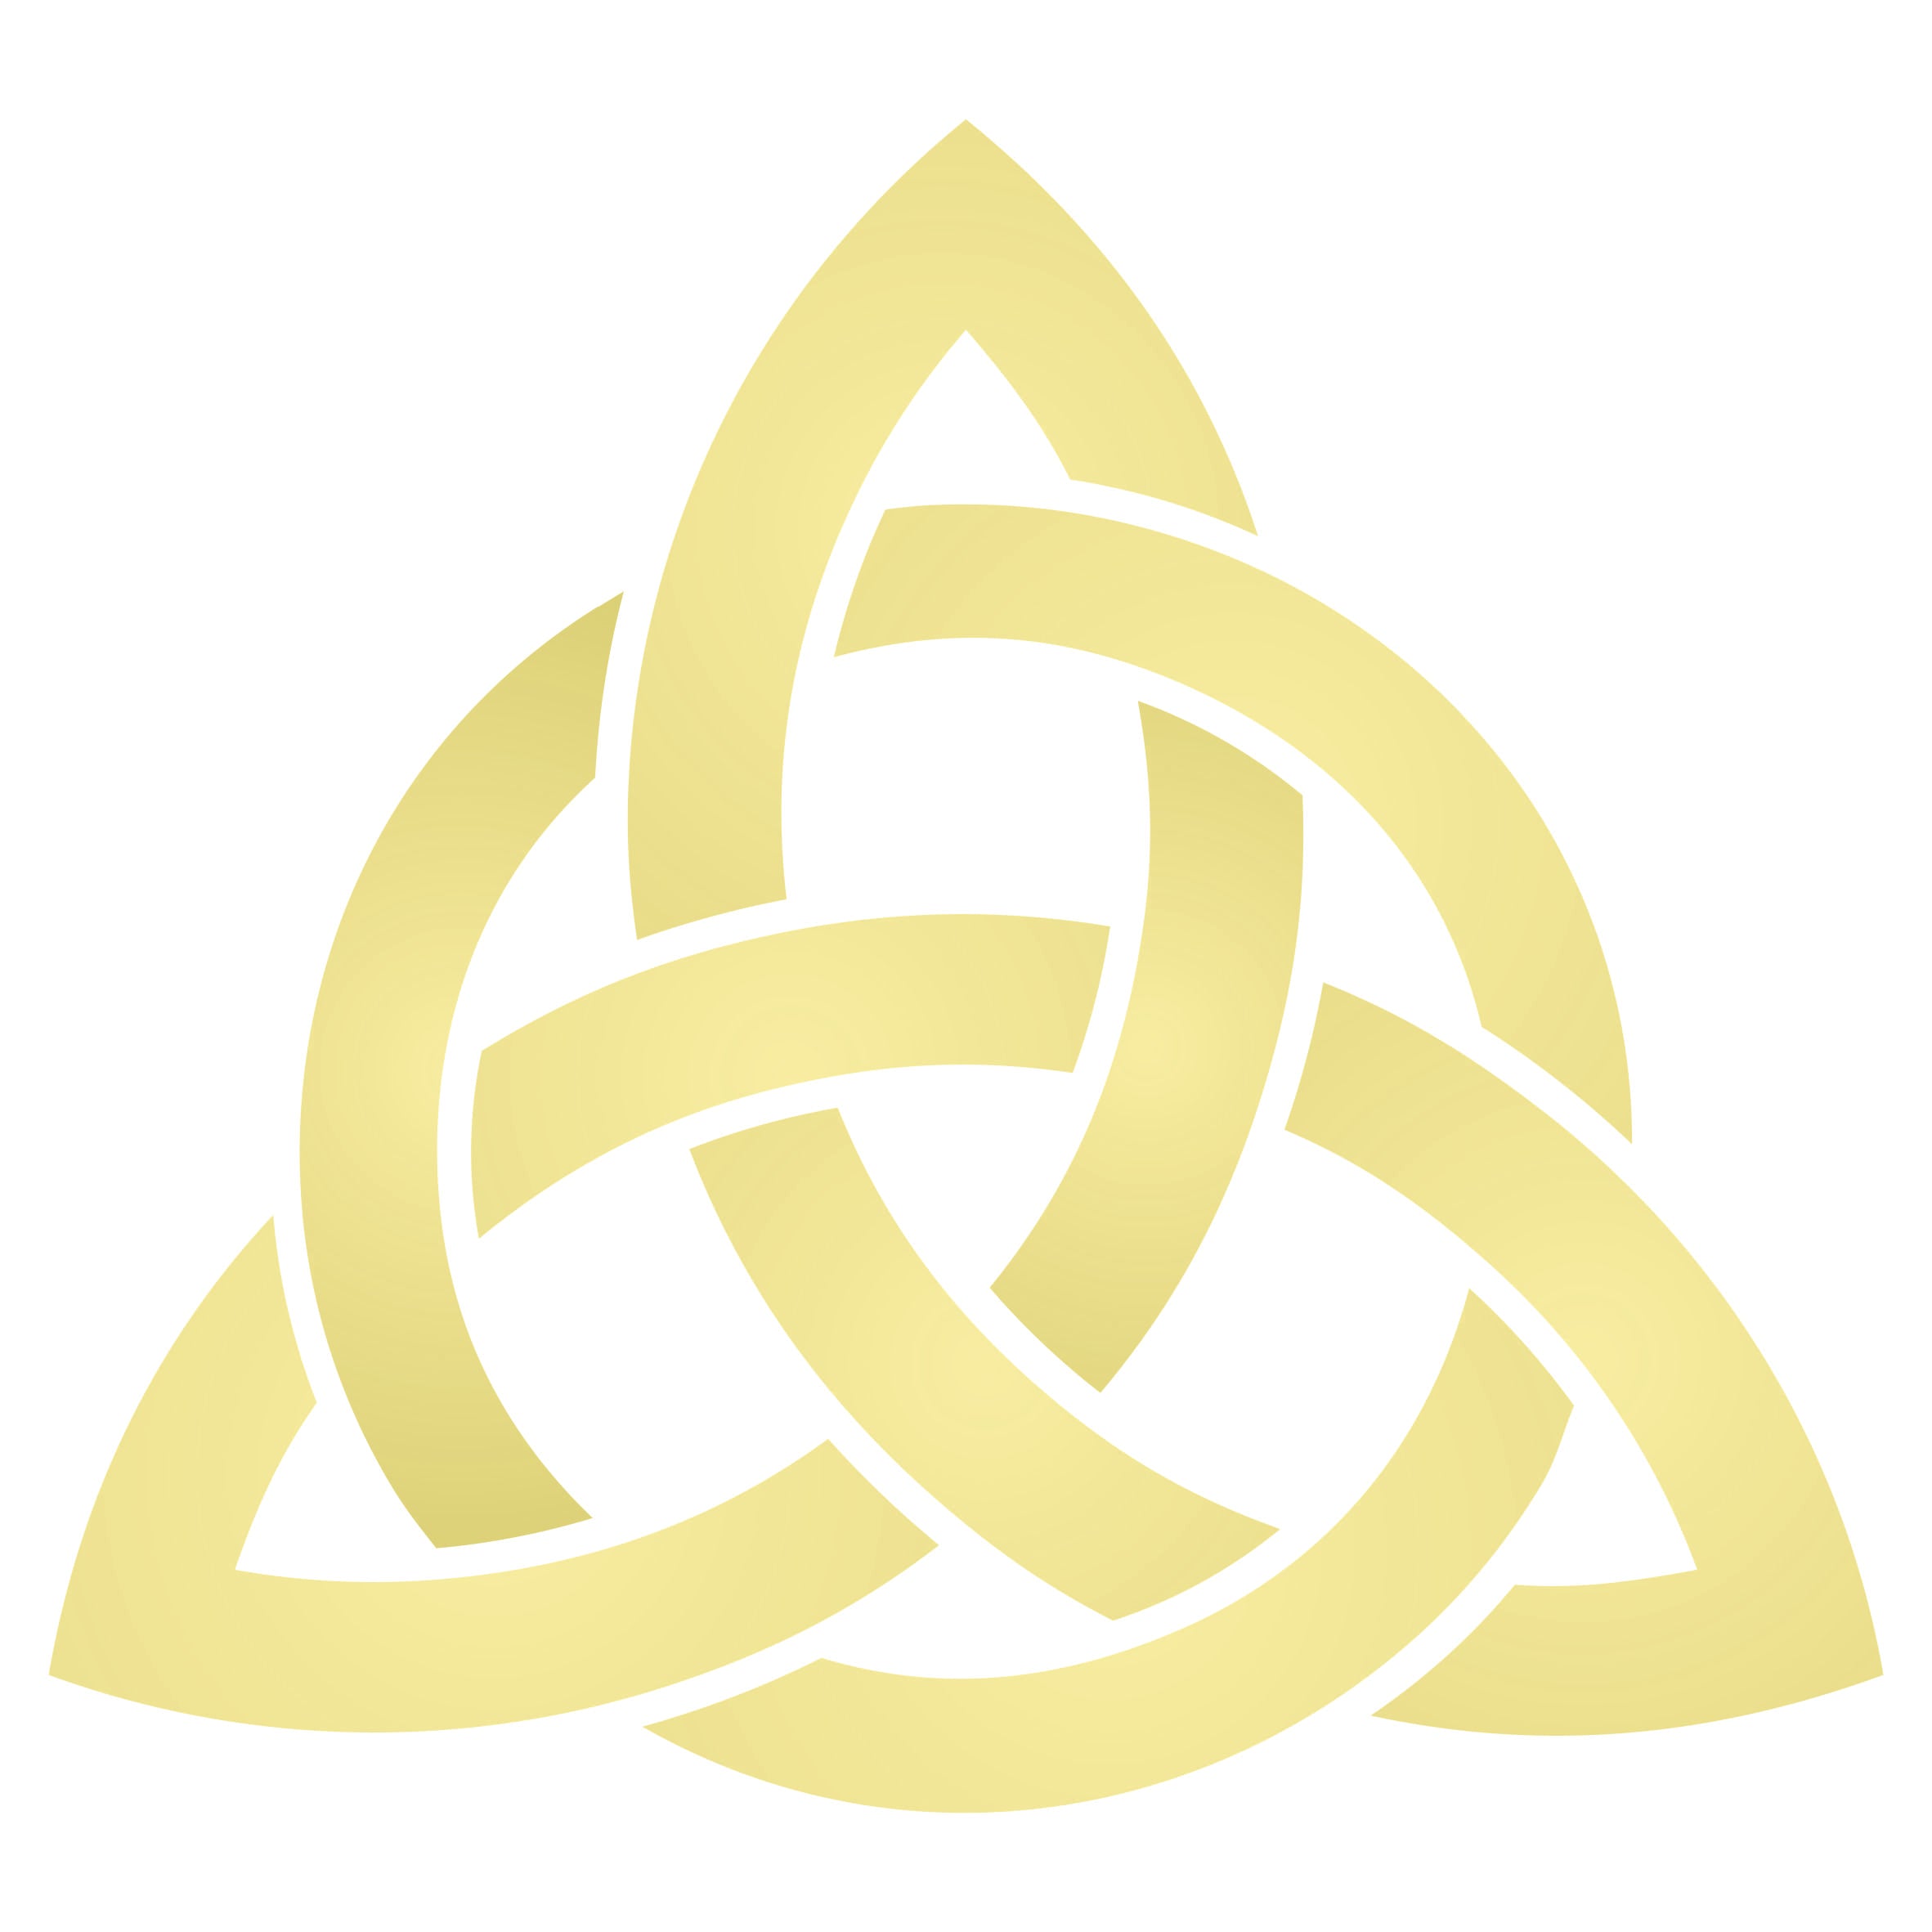 Celtic Trinity Knot Stencil - Geometric Knotwork Sacred Symbols Decor Cards